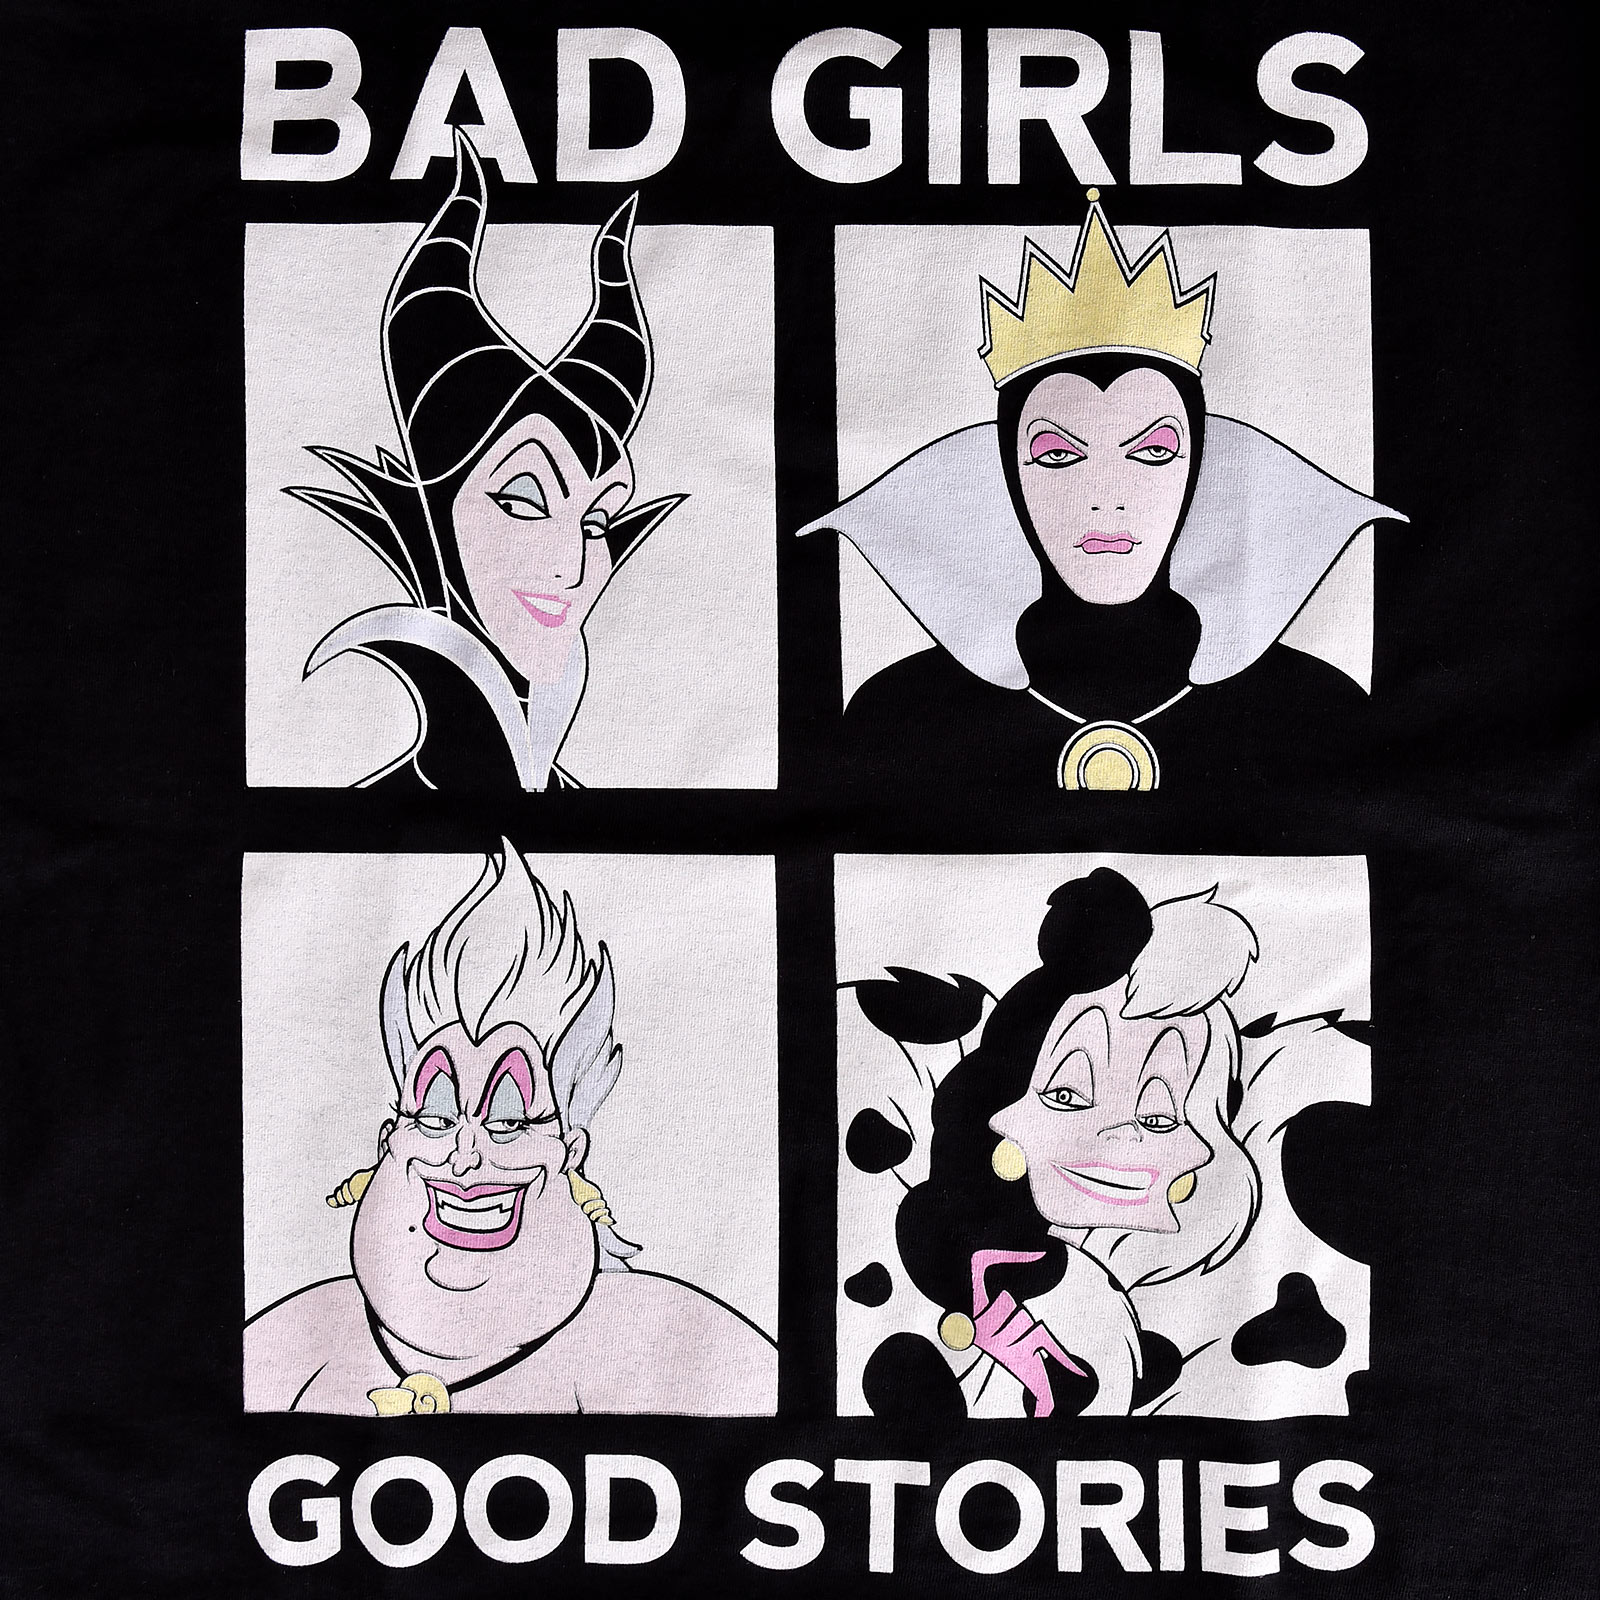 Disney - Villains Bad Girls T-Shirt Women Loose Fit Black